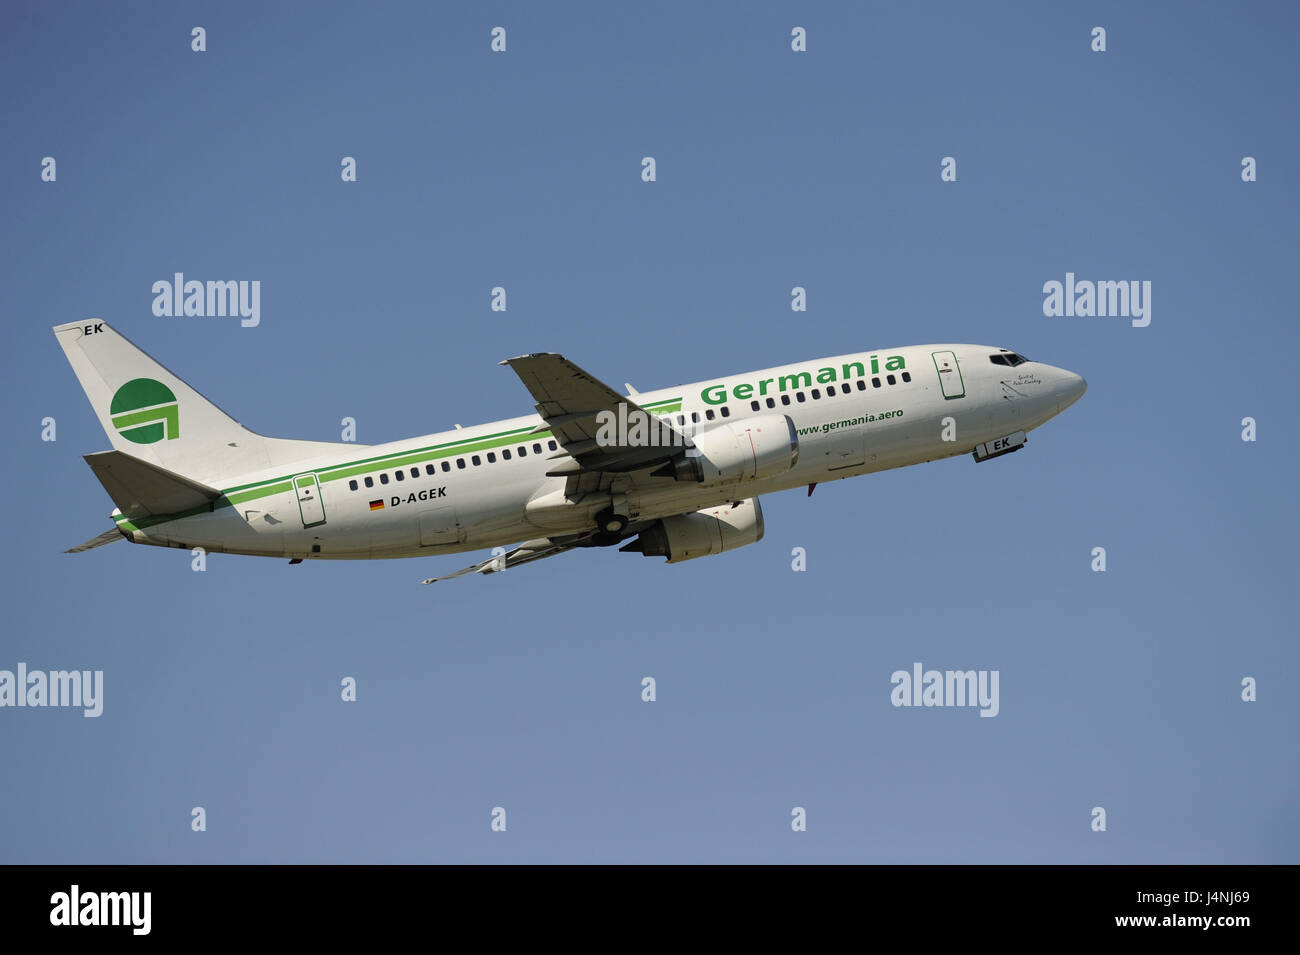 Airplane, airline, Germania, start, Stock Photo